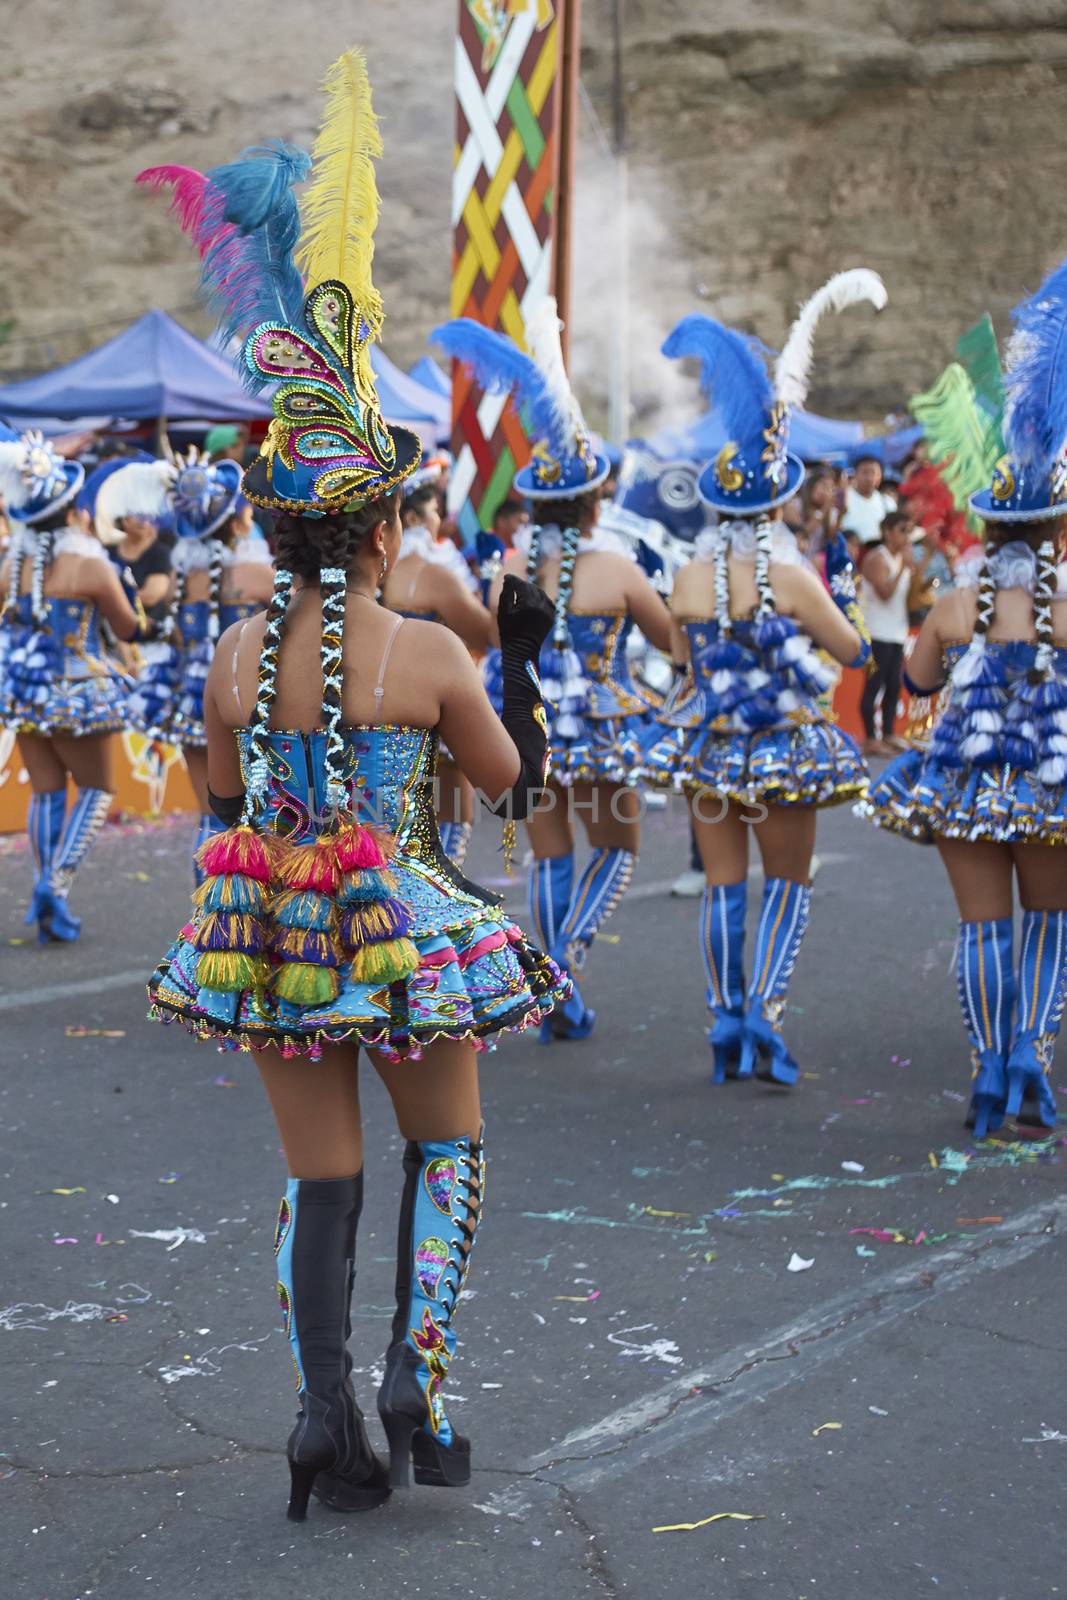 Morenada dancers in traditional Andean costume performing at the annual Carnaval Andino con la Fuerza del Sol in Arica, Chile.